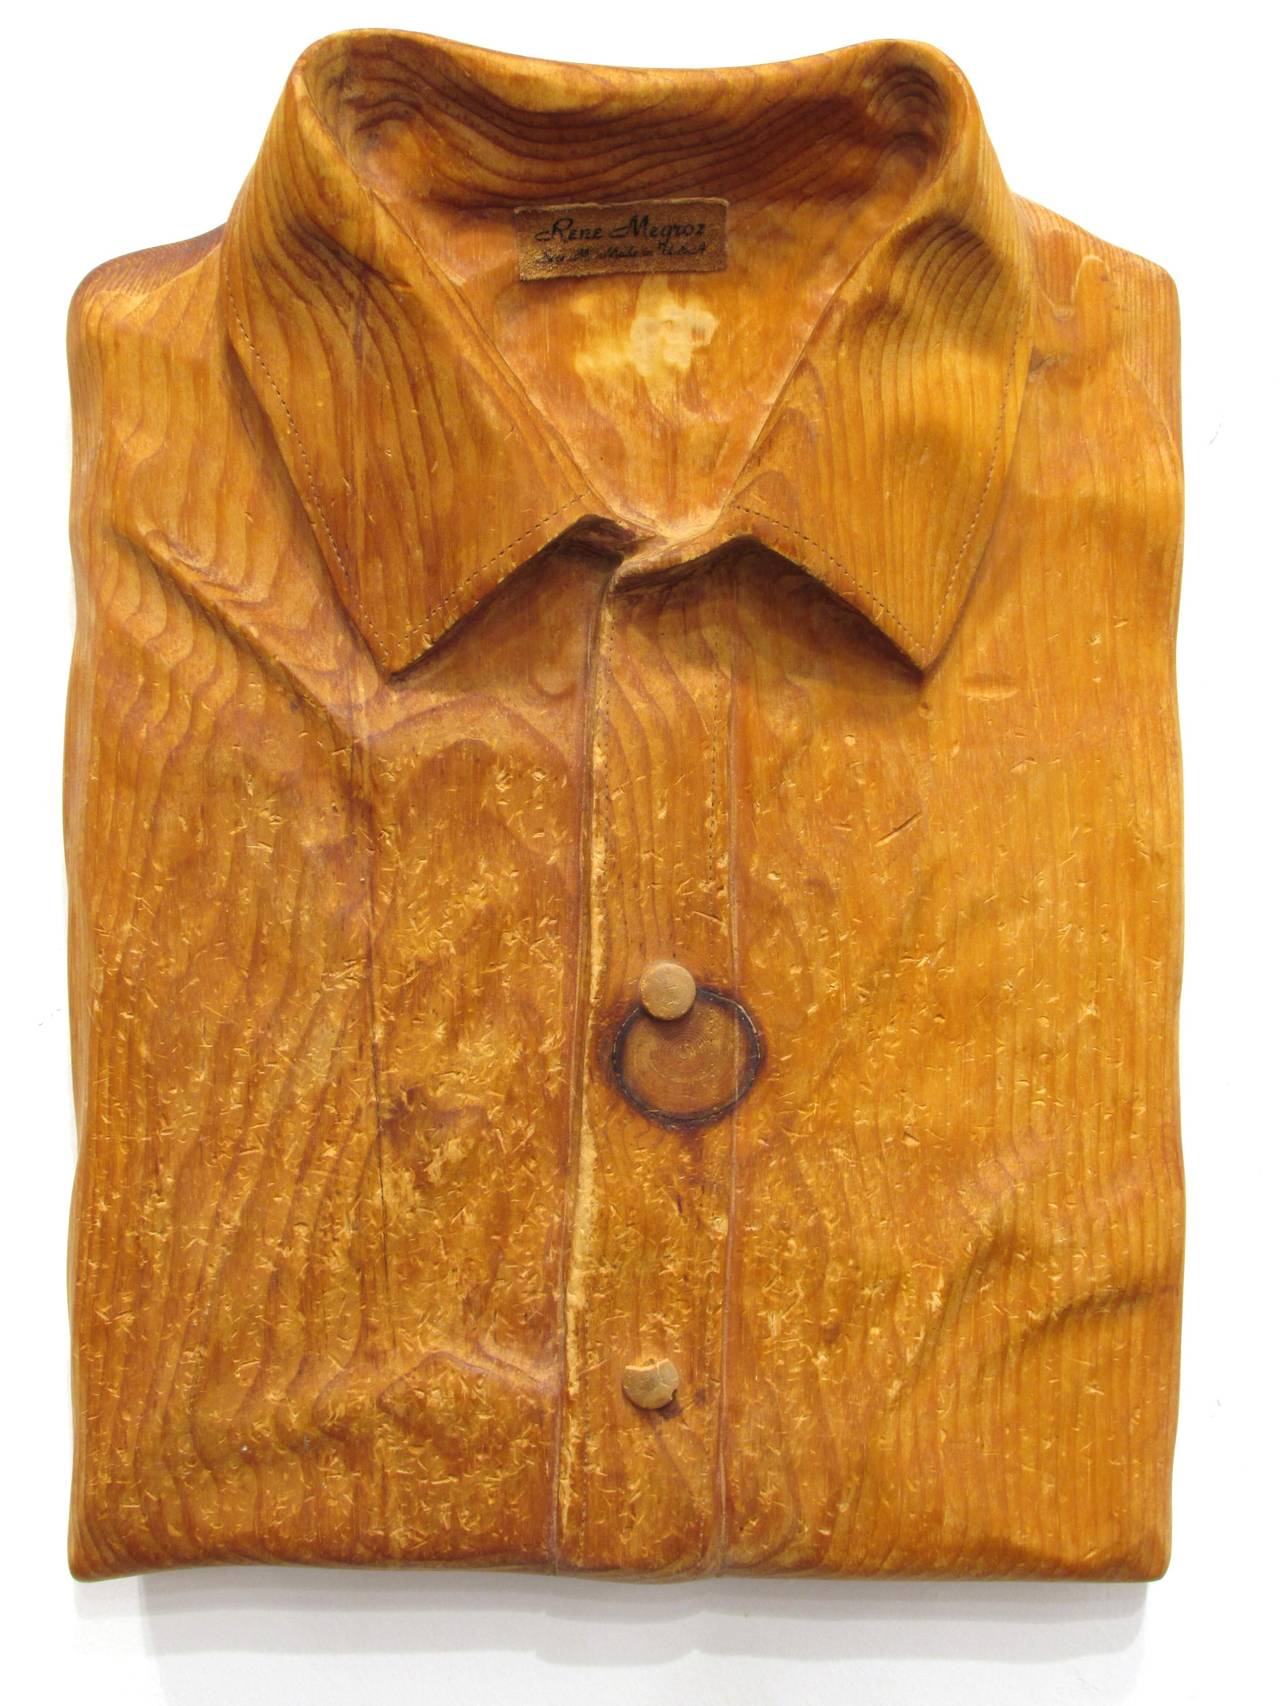 Carved Wooden Shirt Sculpture For Sale